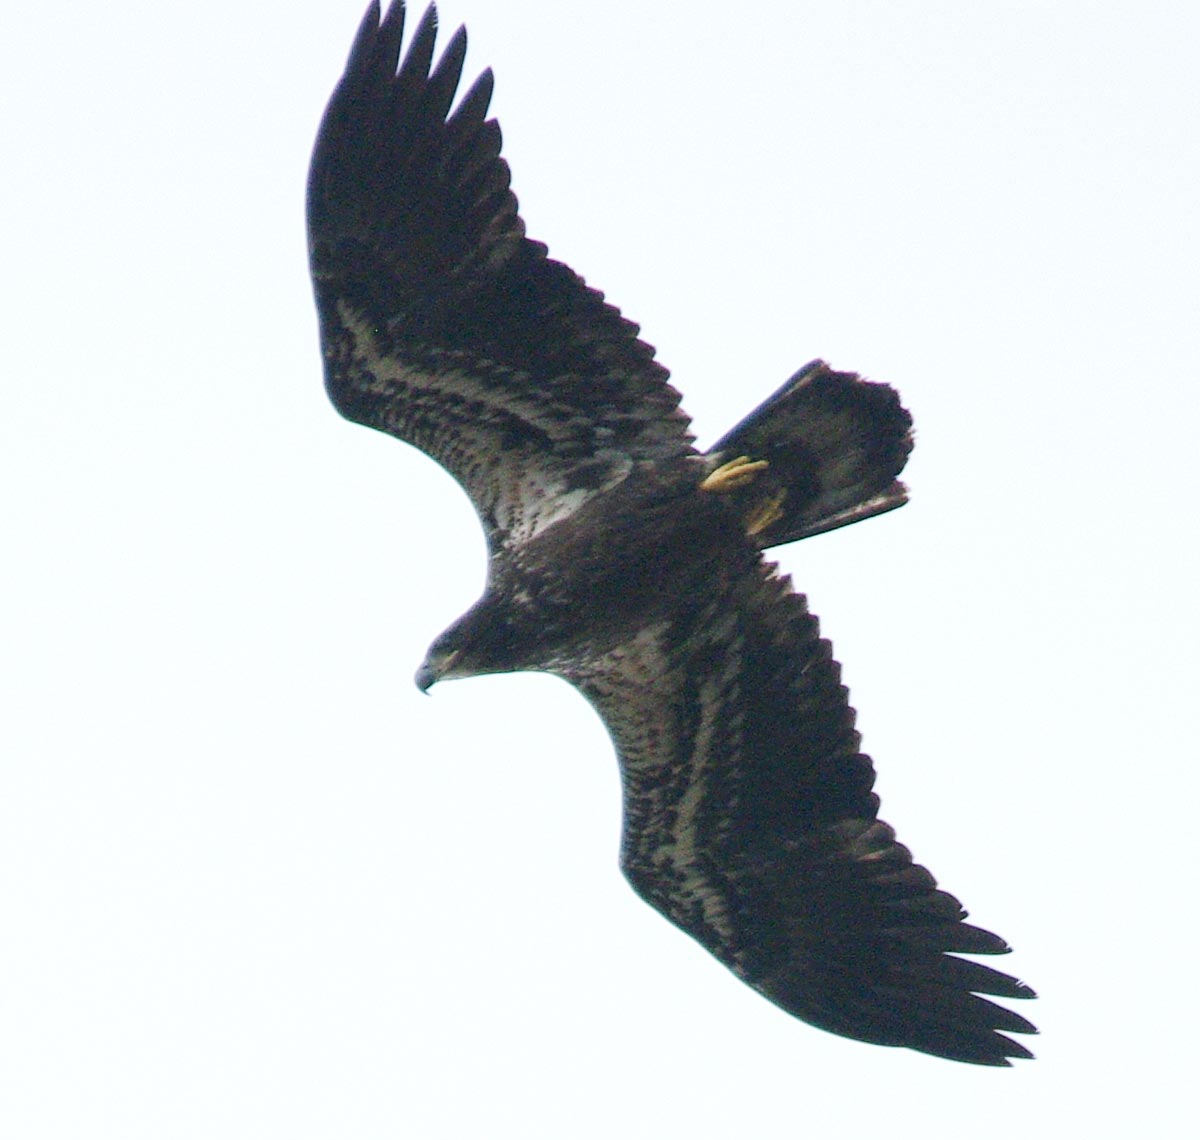 The second juvenile bald eagle